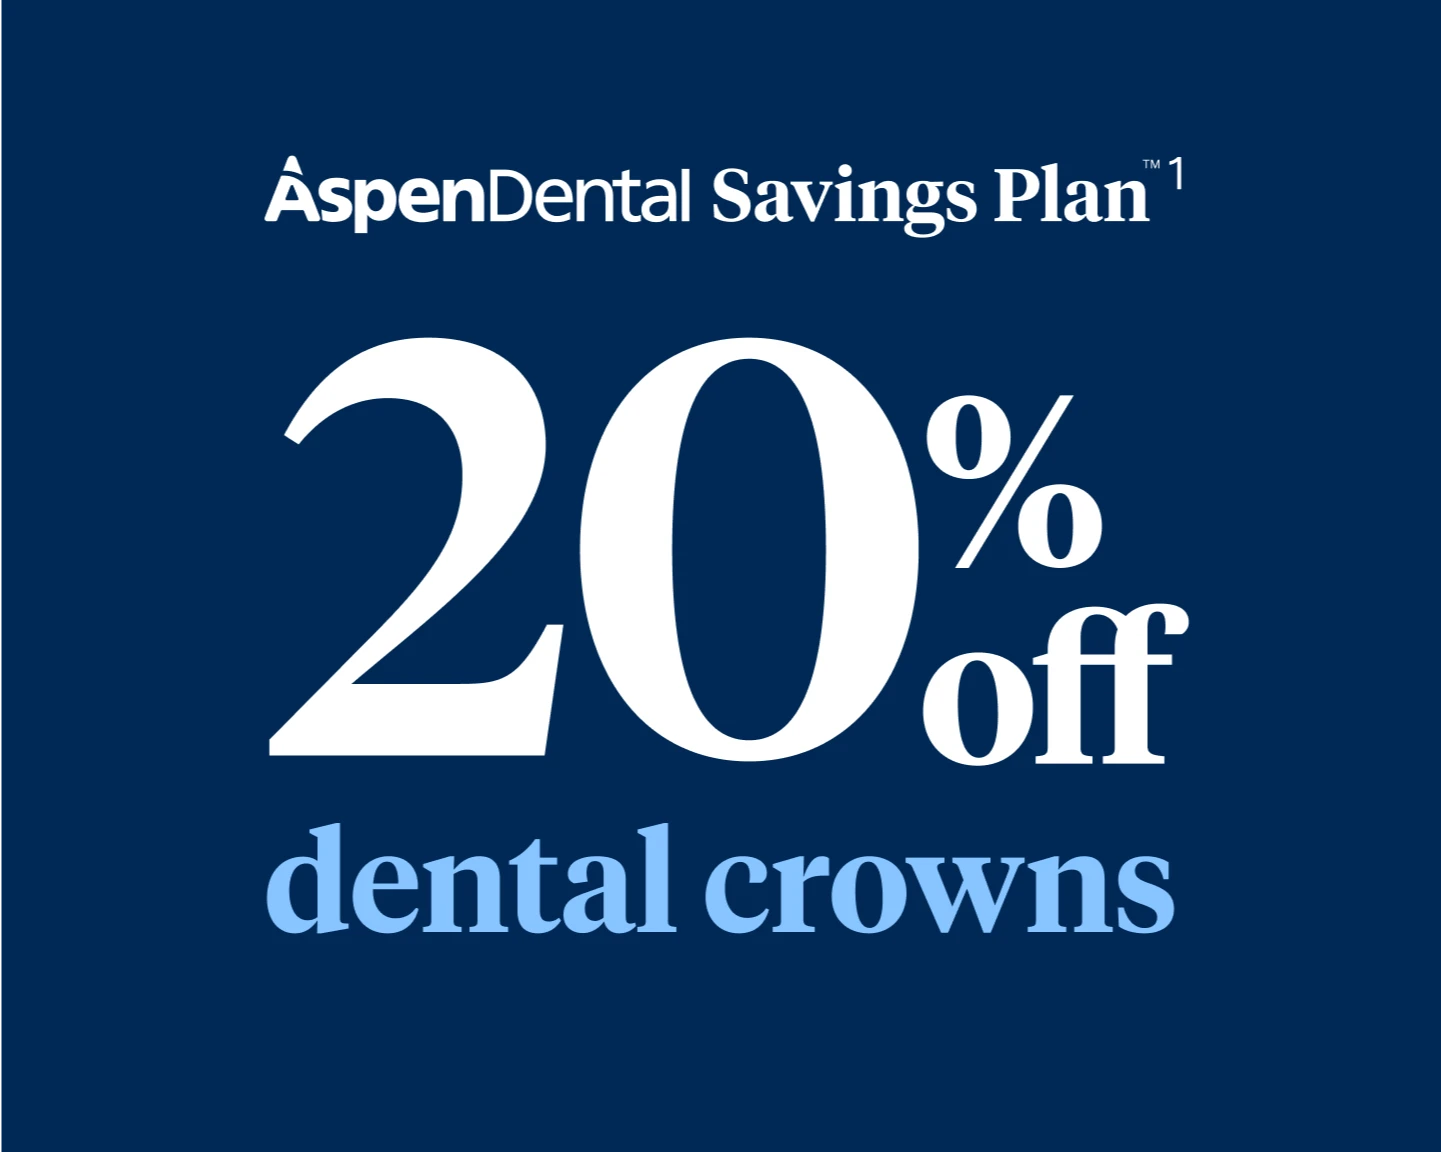 Aspen Dental Savings Plan 20% off dental crowns. 